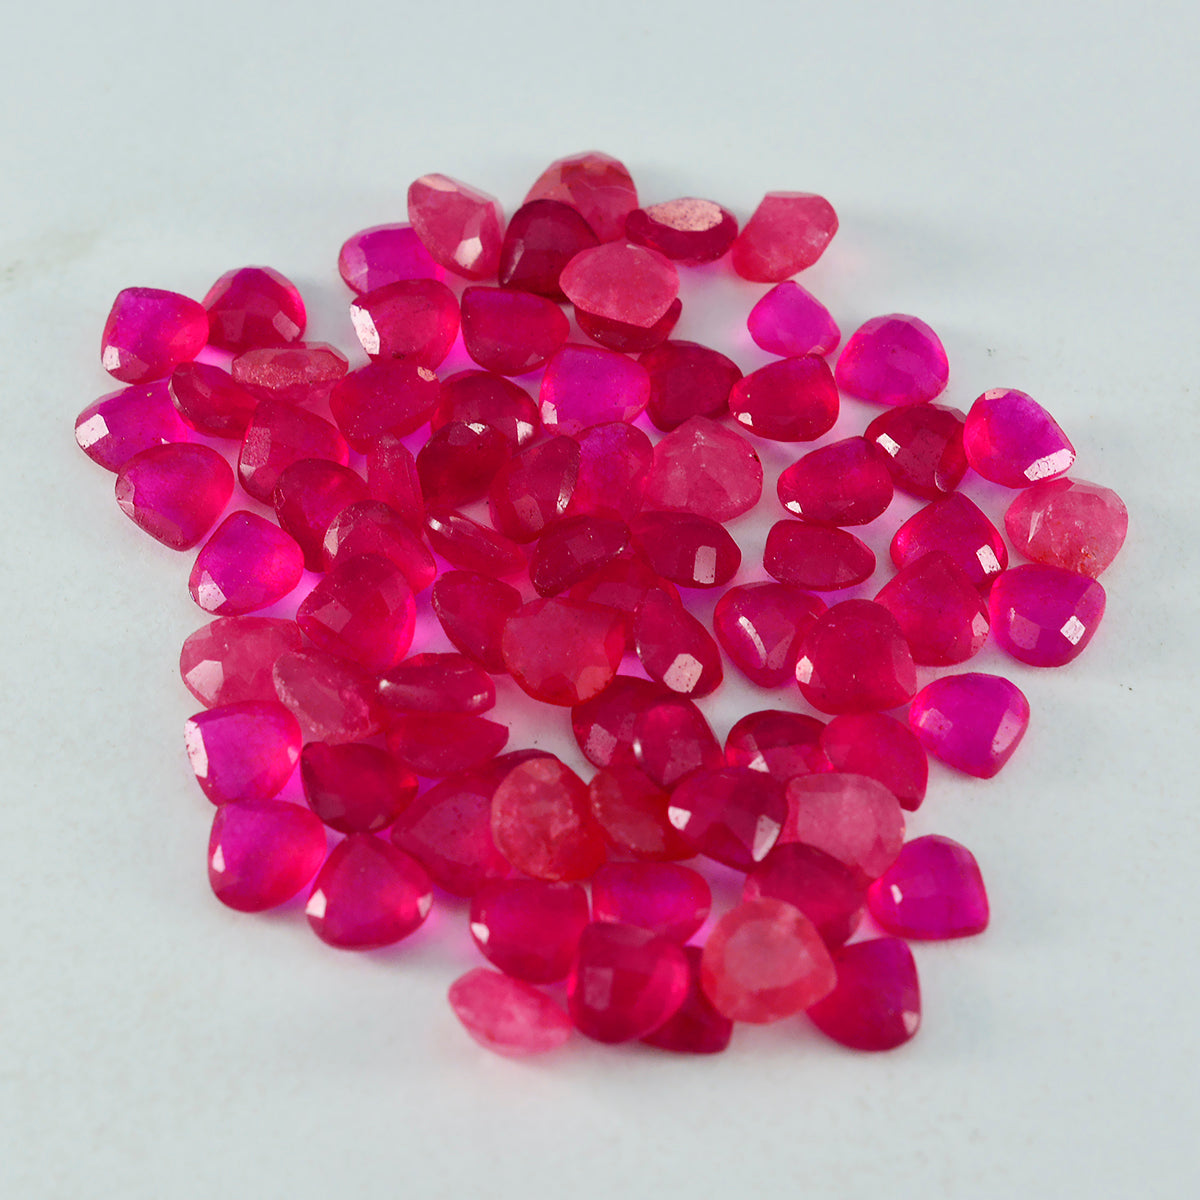 Riyogems 1PC Genuine Red Jasper Faceted 6x6 mm Heart Shape pretty Quality Gemstone